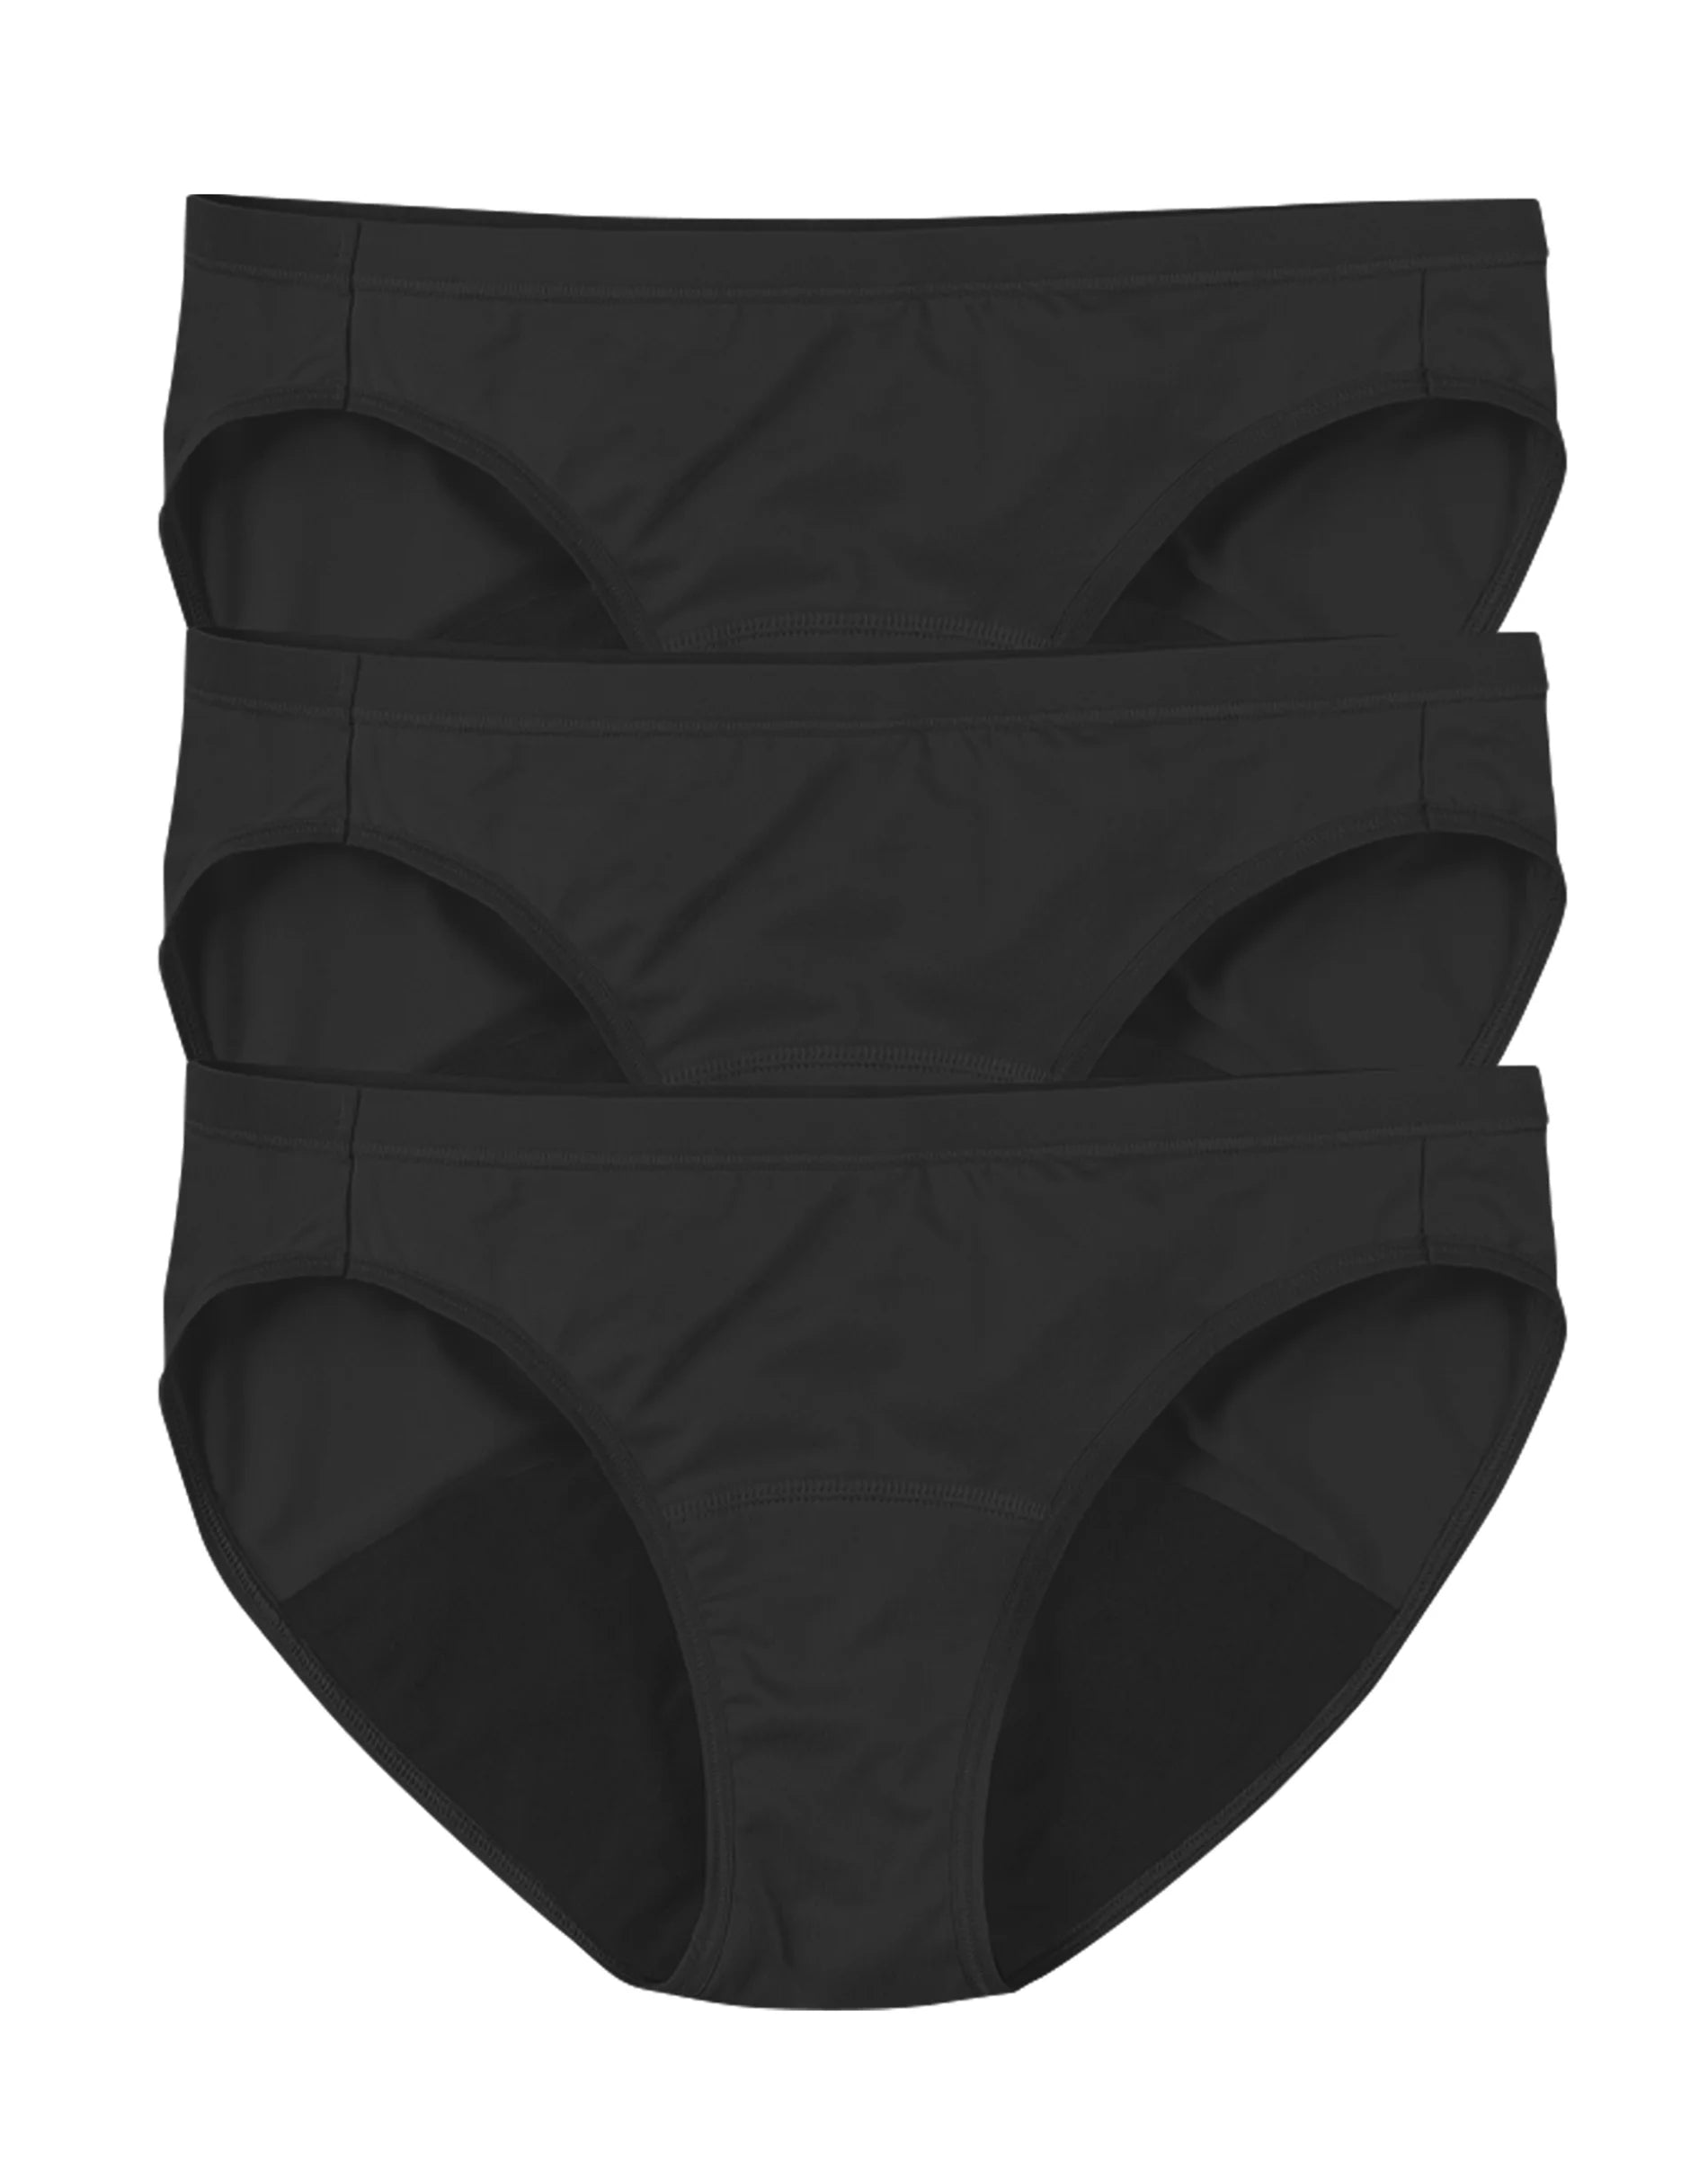 LL42BL - Hanes Women’s Fresh & Dry Light Period Underwear Bikini Black ...